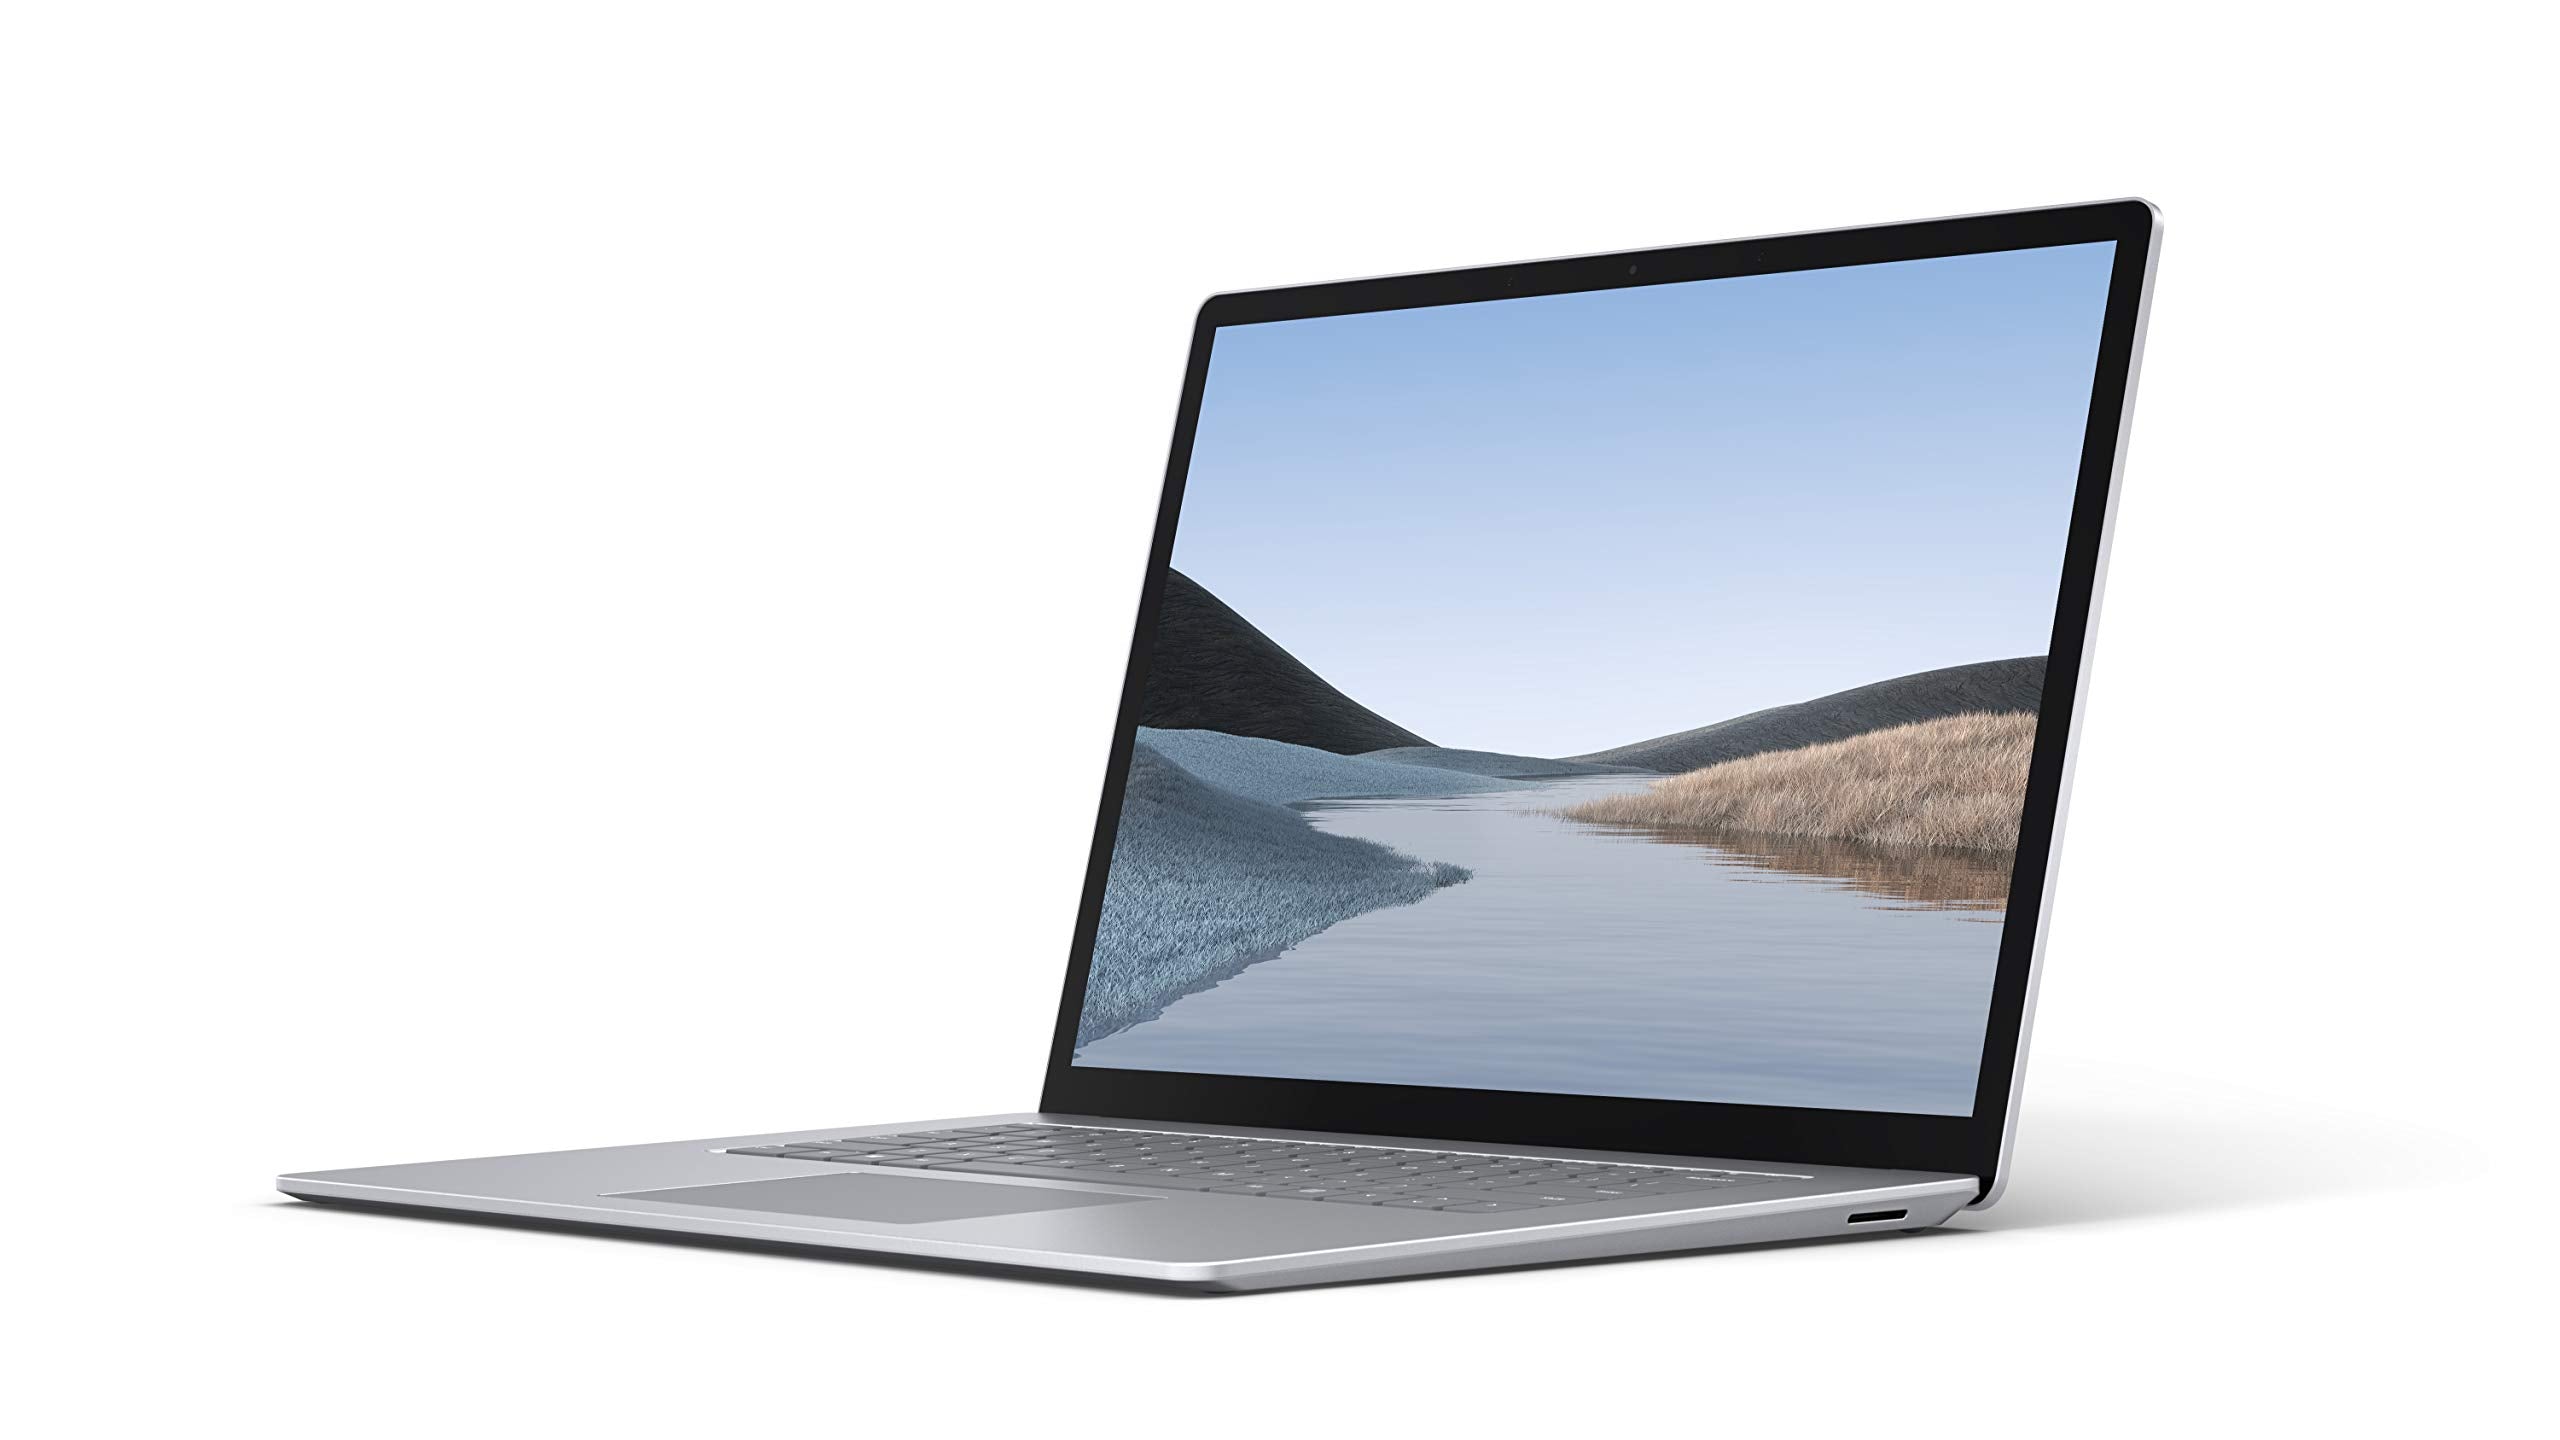 Microsoft Surface Laptop 3 15" Touchscreen Laptop - Silver (Intel Core i5/128GB SSD/8GB RAM/Windows 11)